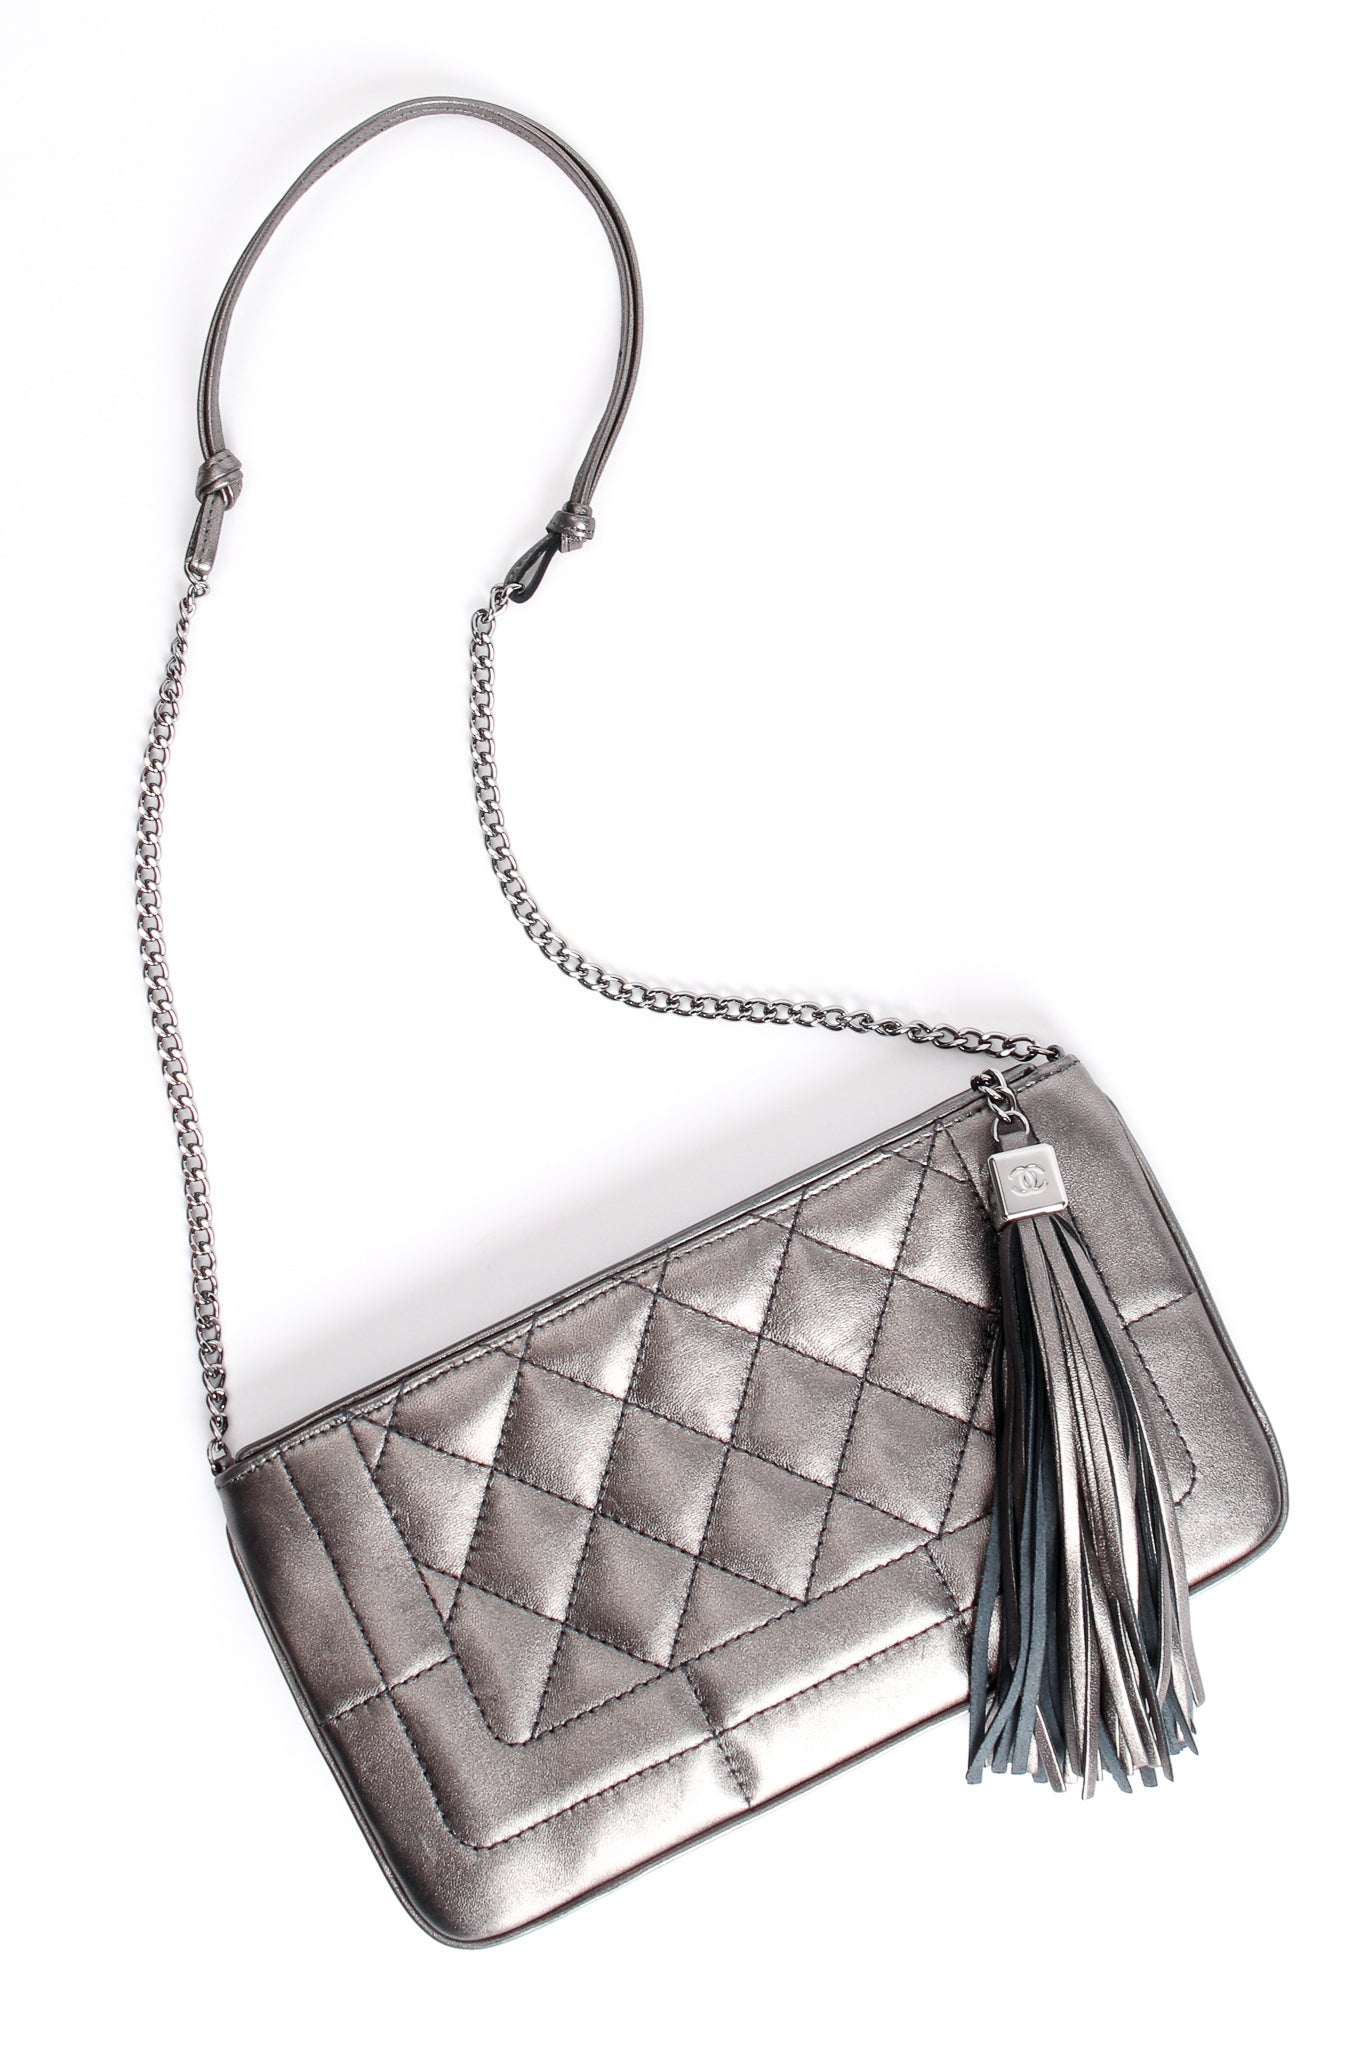 Vintage Chanel 2004 Metallic Quilted Tassel Shoulder Bag top at Recess Los Angeles